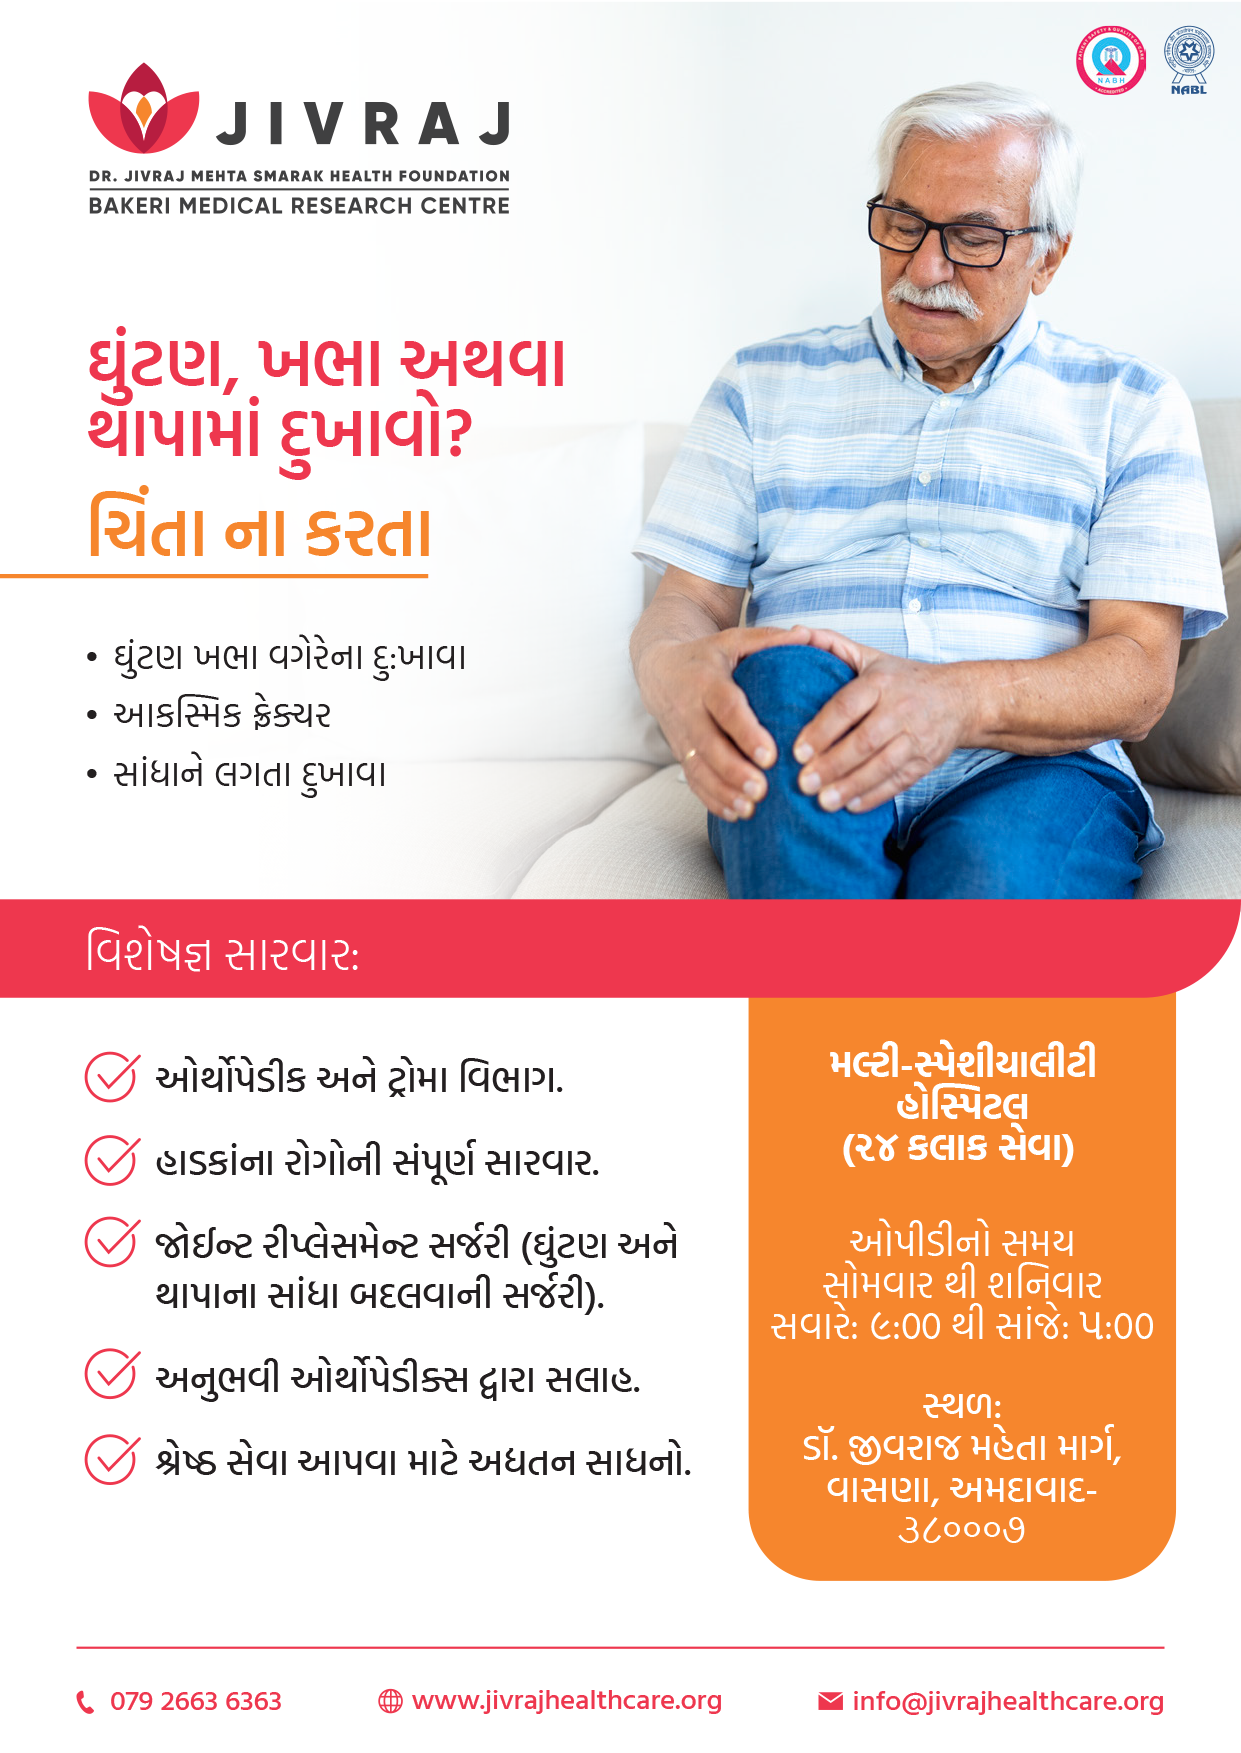 Best Orthopedic Doctor in Ahmedabad, Top Orthopedic Hospitals in Gujarat